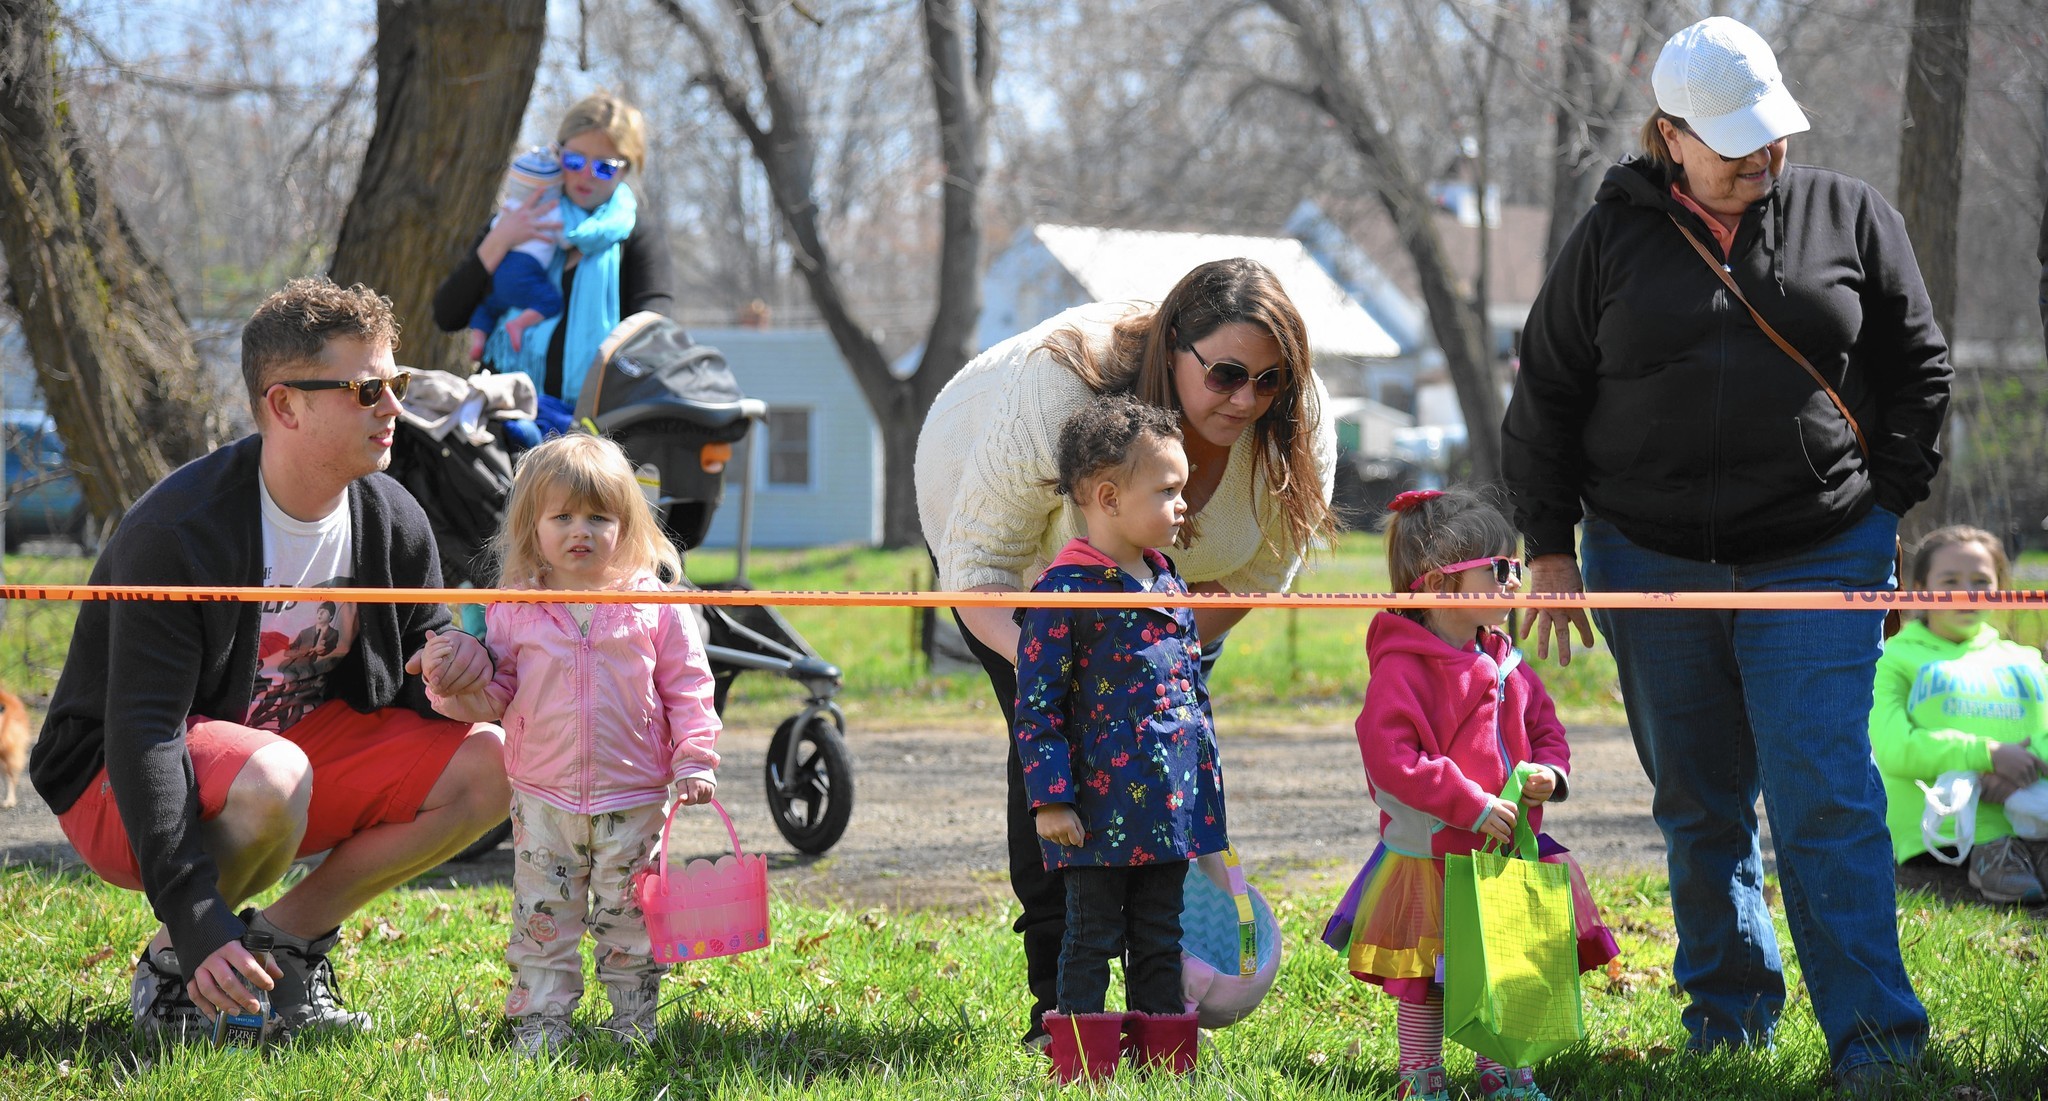 Charitable group celebrates spring with Easter egg hunt Chicago Tribune